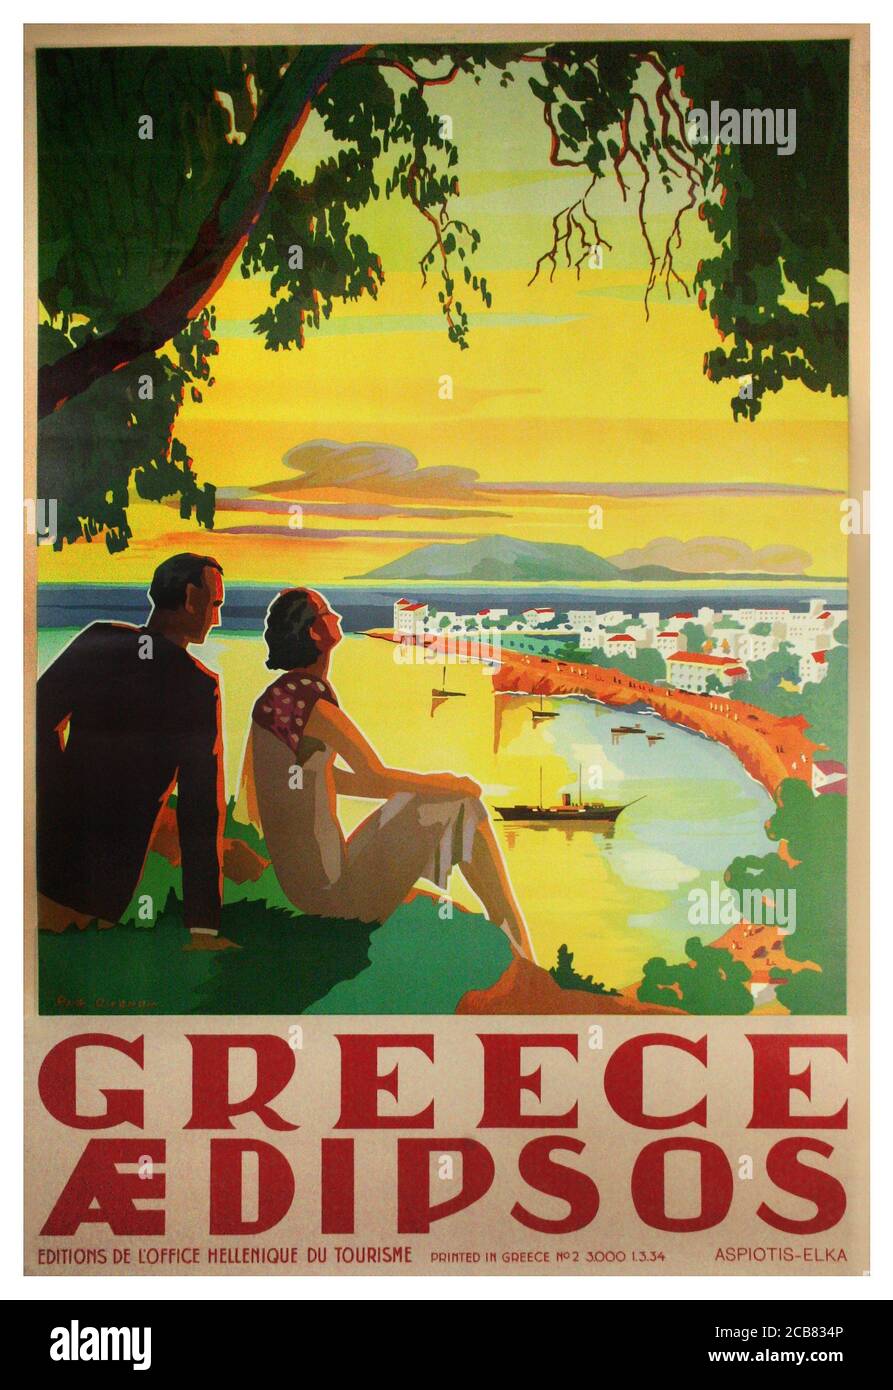 1930er Jahre Vintage Griechenland Tourismus Poster Greek Aedipsos Europe European Vintage Reisewerbung Plakat des Tourismusbüros Hellenique Stockfoto